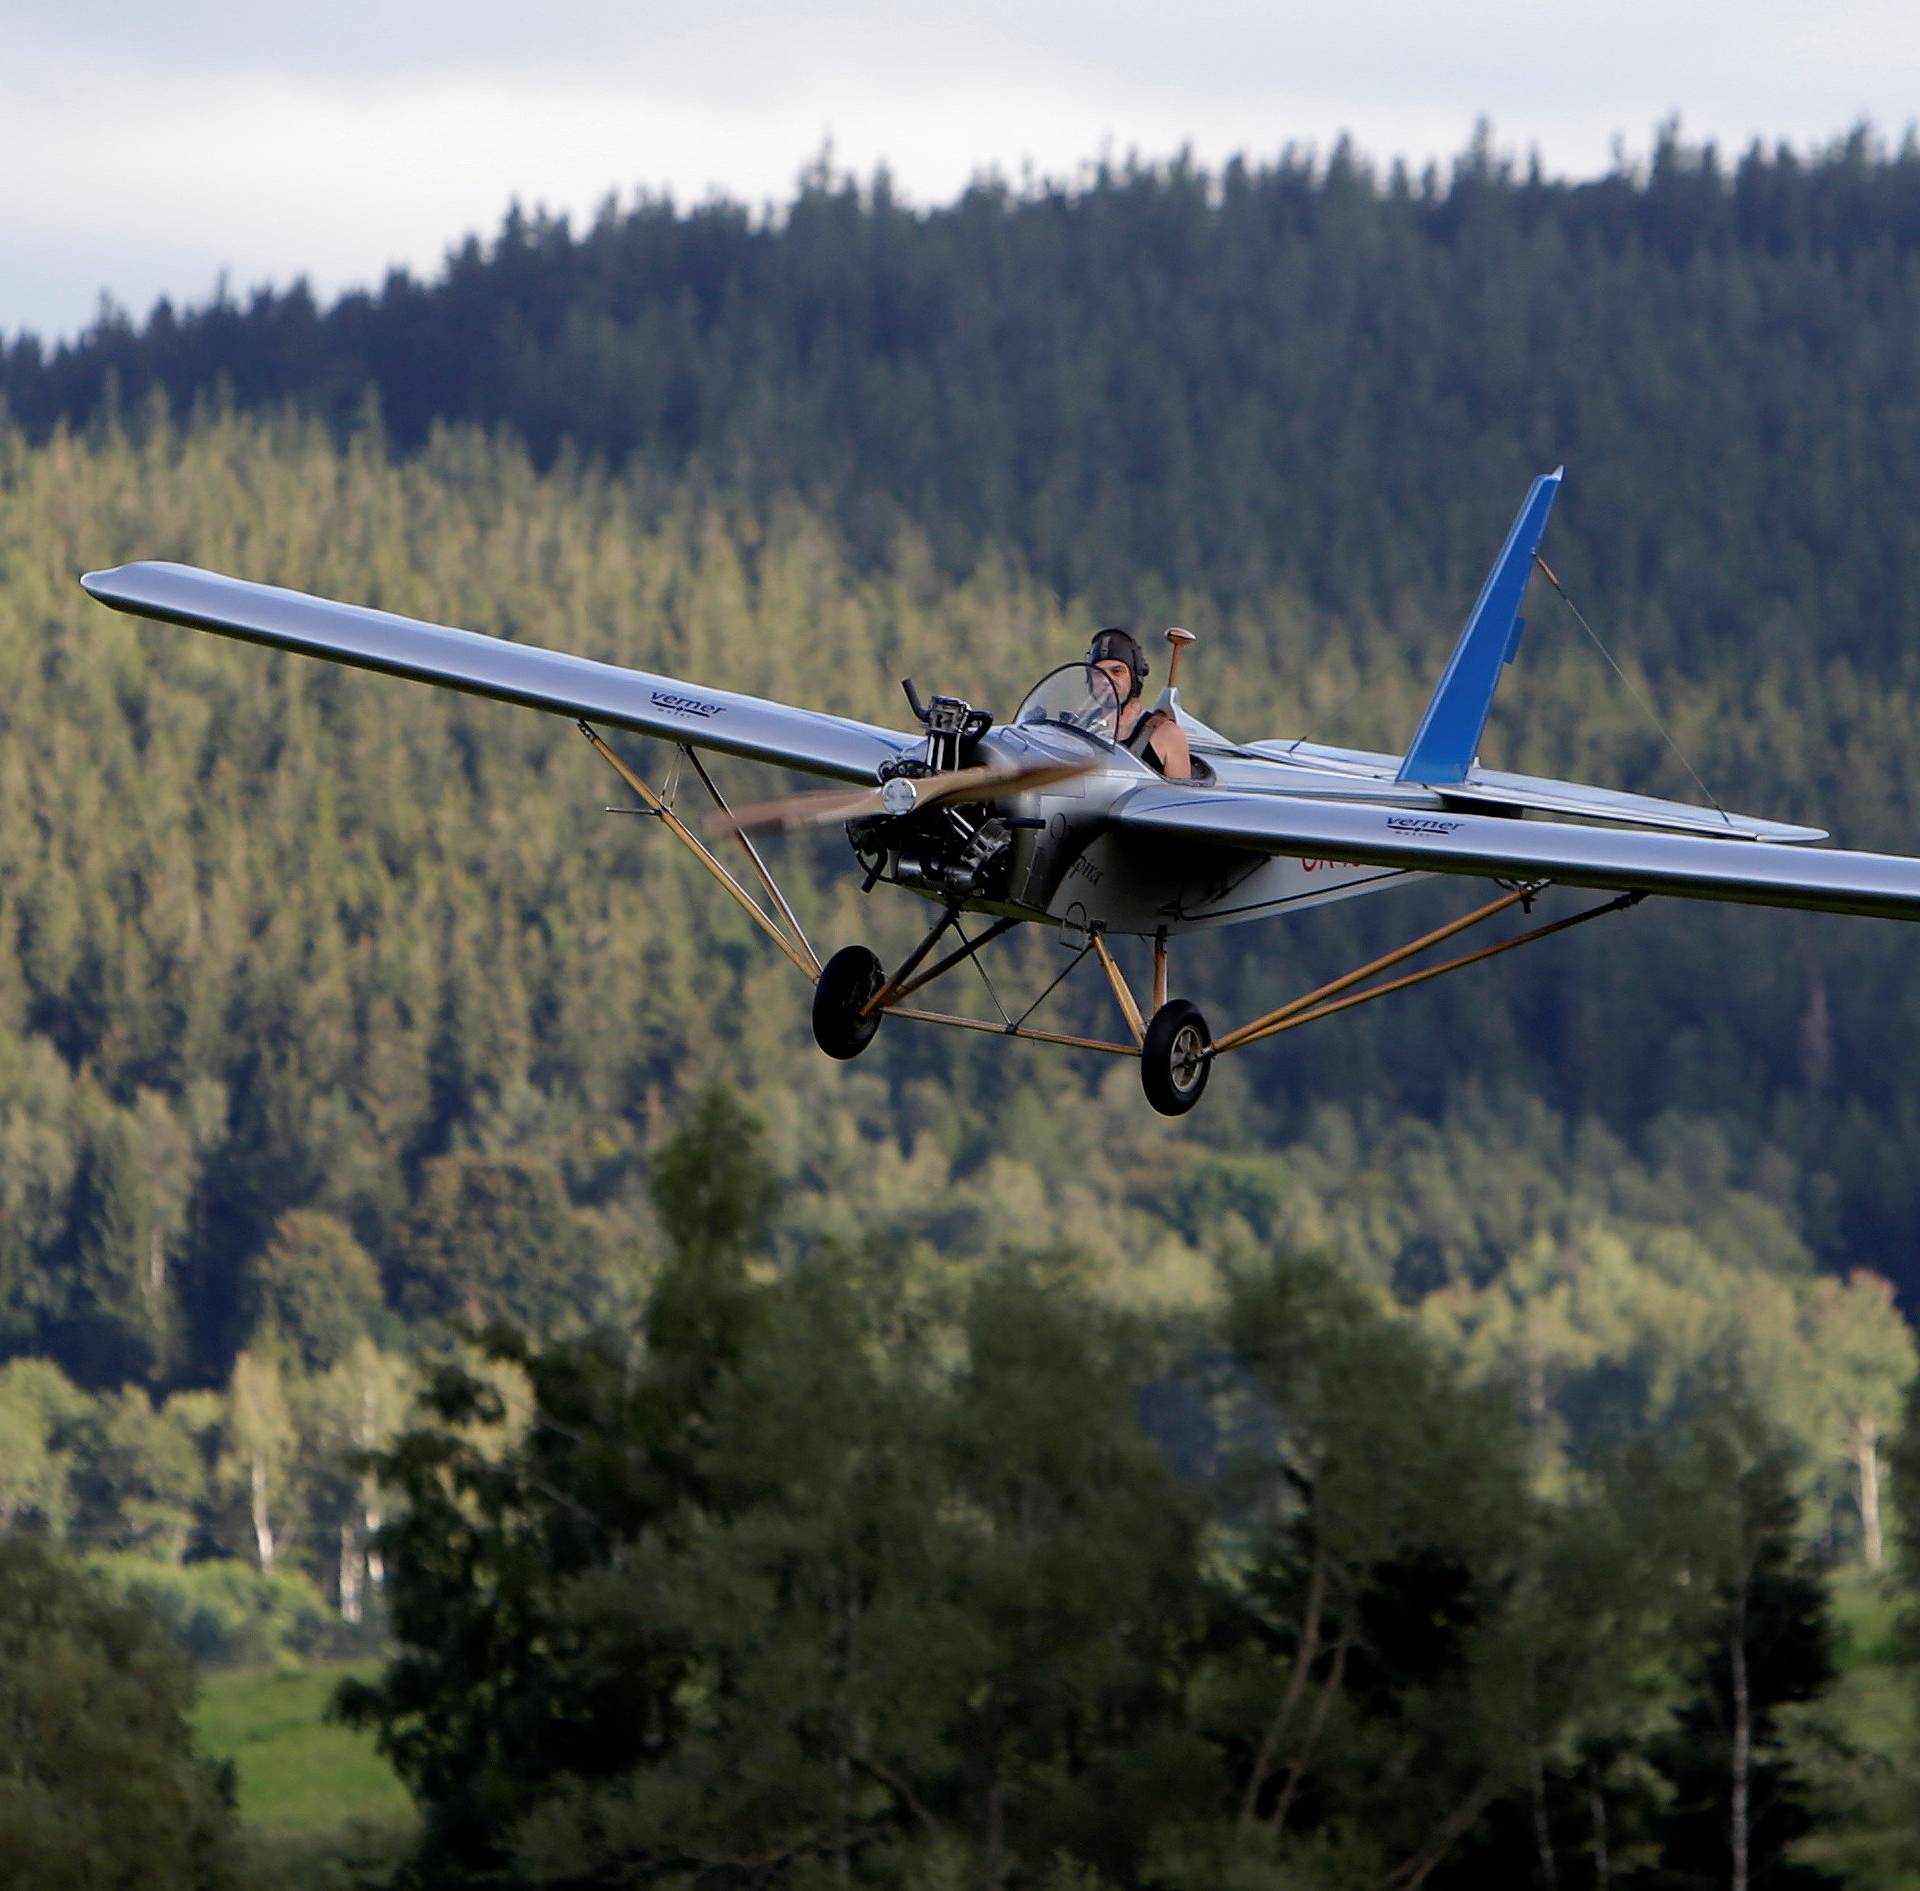 Aviator Frantisek Hadrava pilots Vampira, an ultralight plane based on the U.S.-design of light planes called Mini-Max, near the village of Zdikov